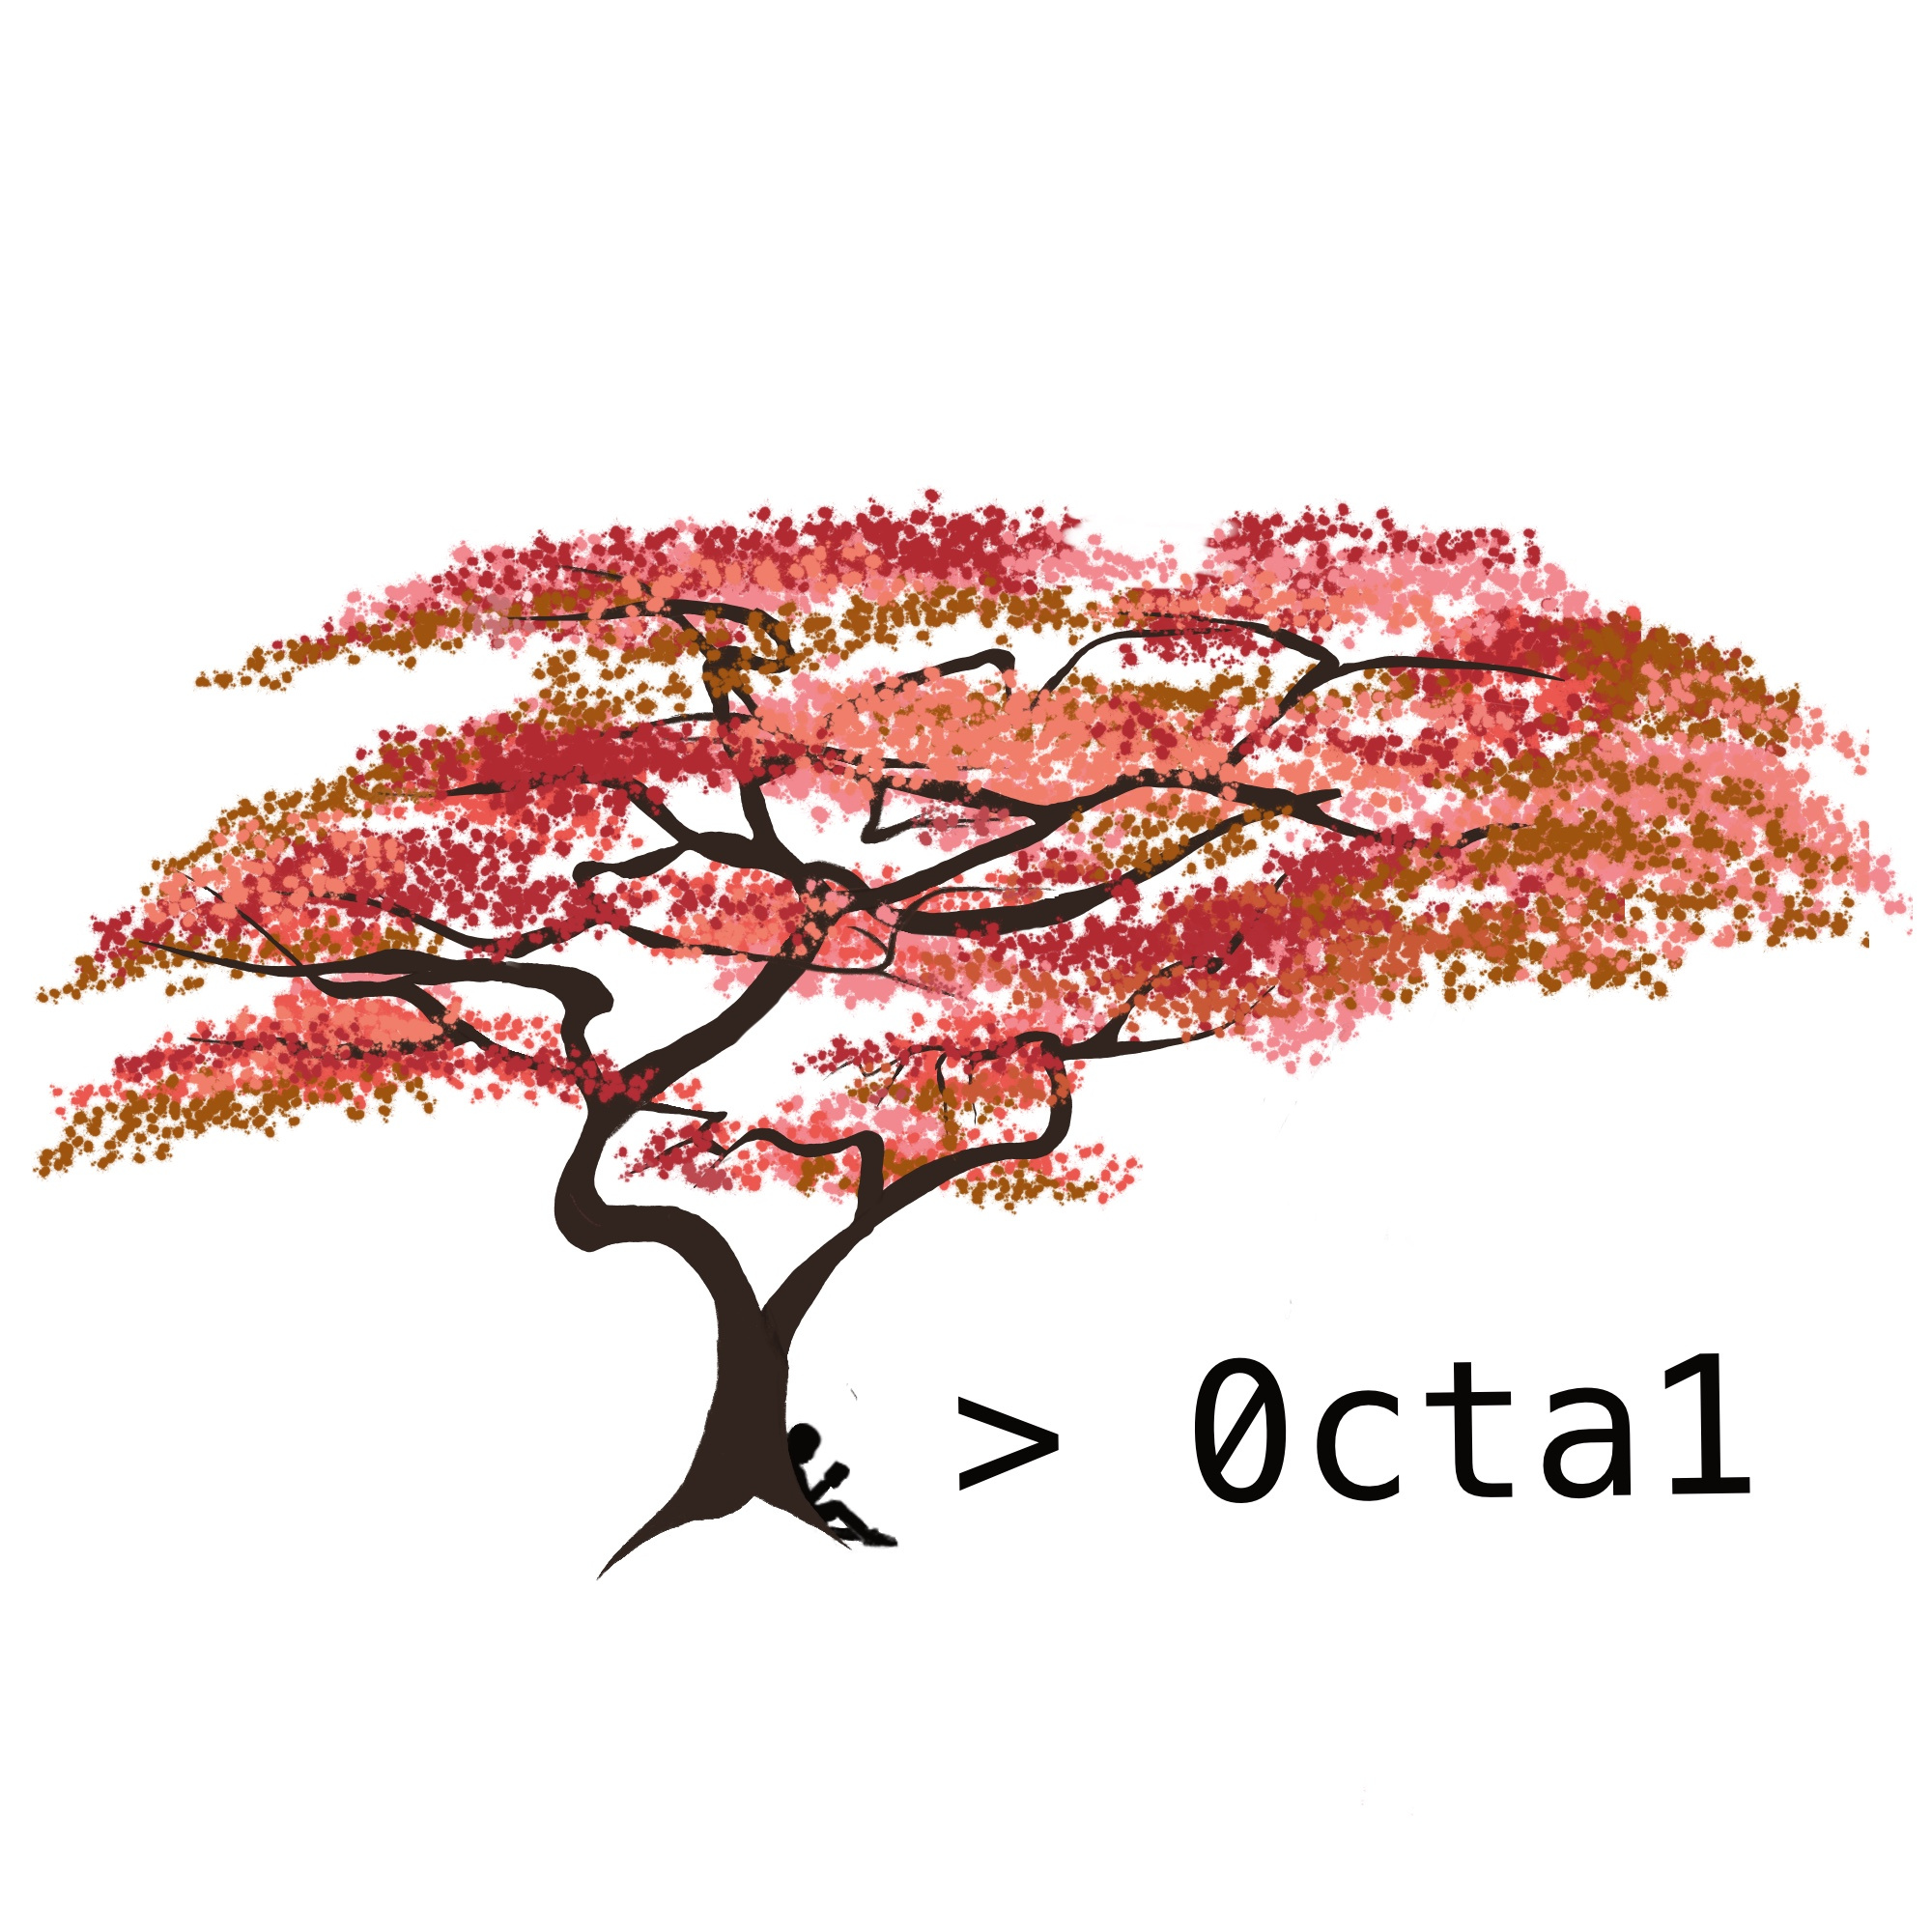 0cta1 Logo (with name)